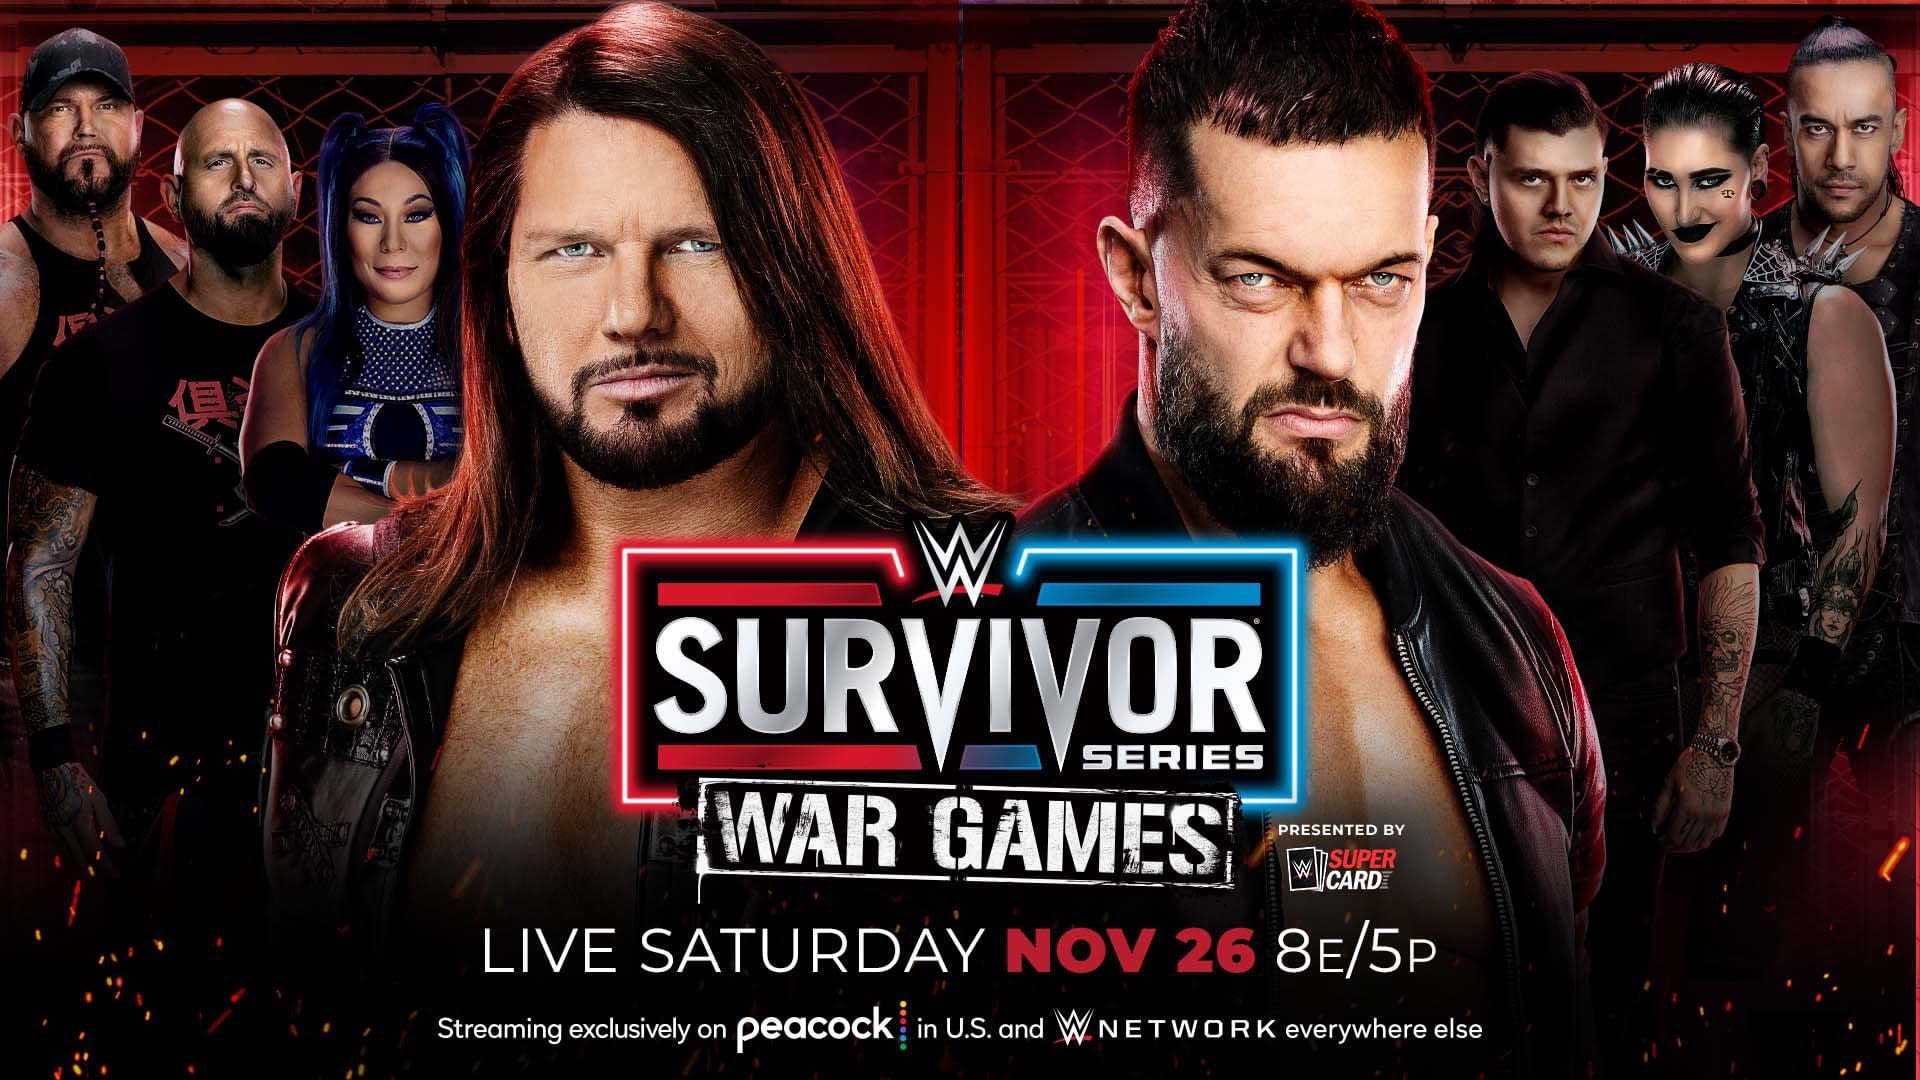 AJ Styles Defeats Finn Balor at WWE Survivor Series War Games